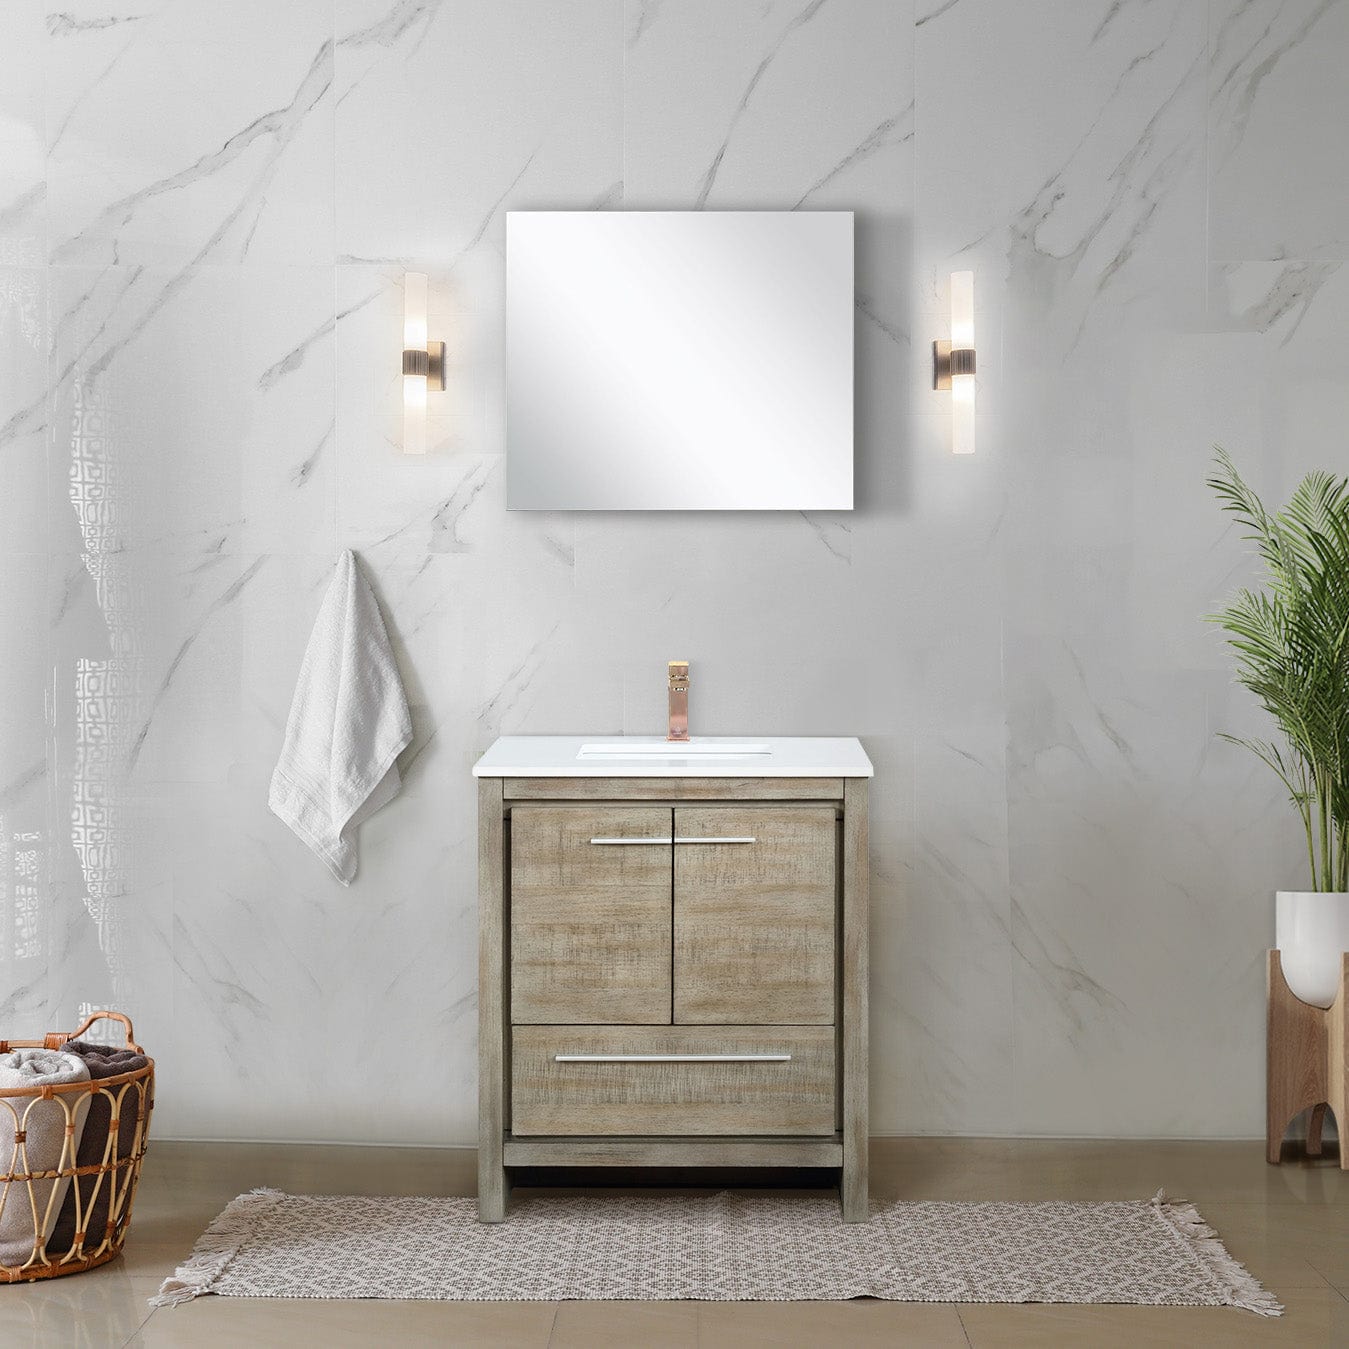 Lexora Bathroom Vanity Cultured Marble / Rose Gold Faucet / No Mirror Lafarre 30" Rustic Acacia Bathroom Vanity